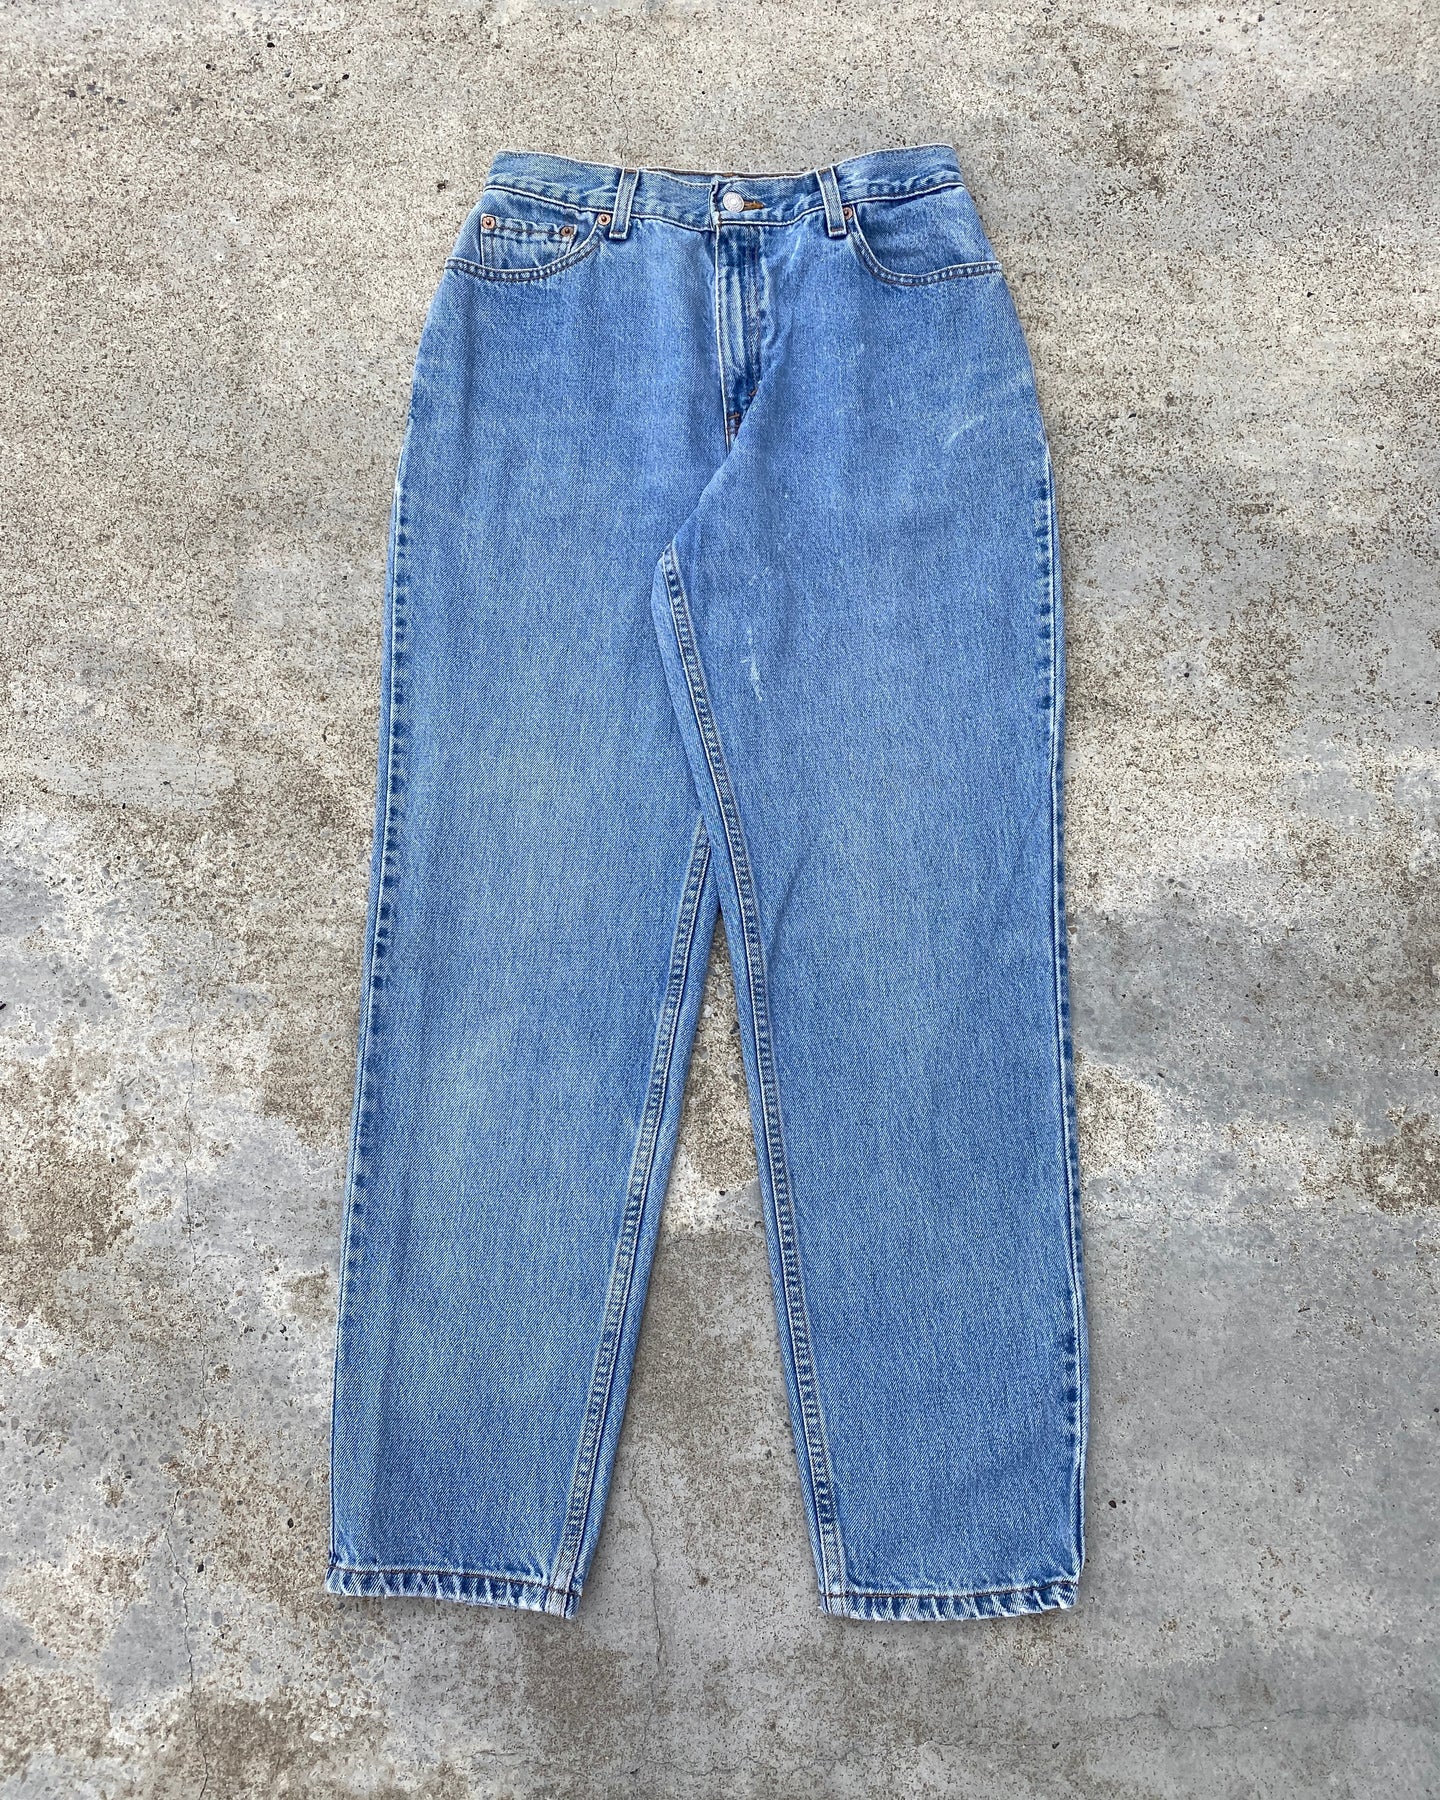 1990s Levi's 550 Mid Wash Jeans - Size 29 x 29